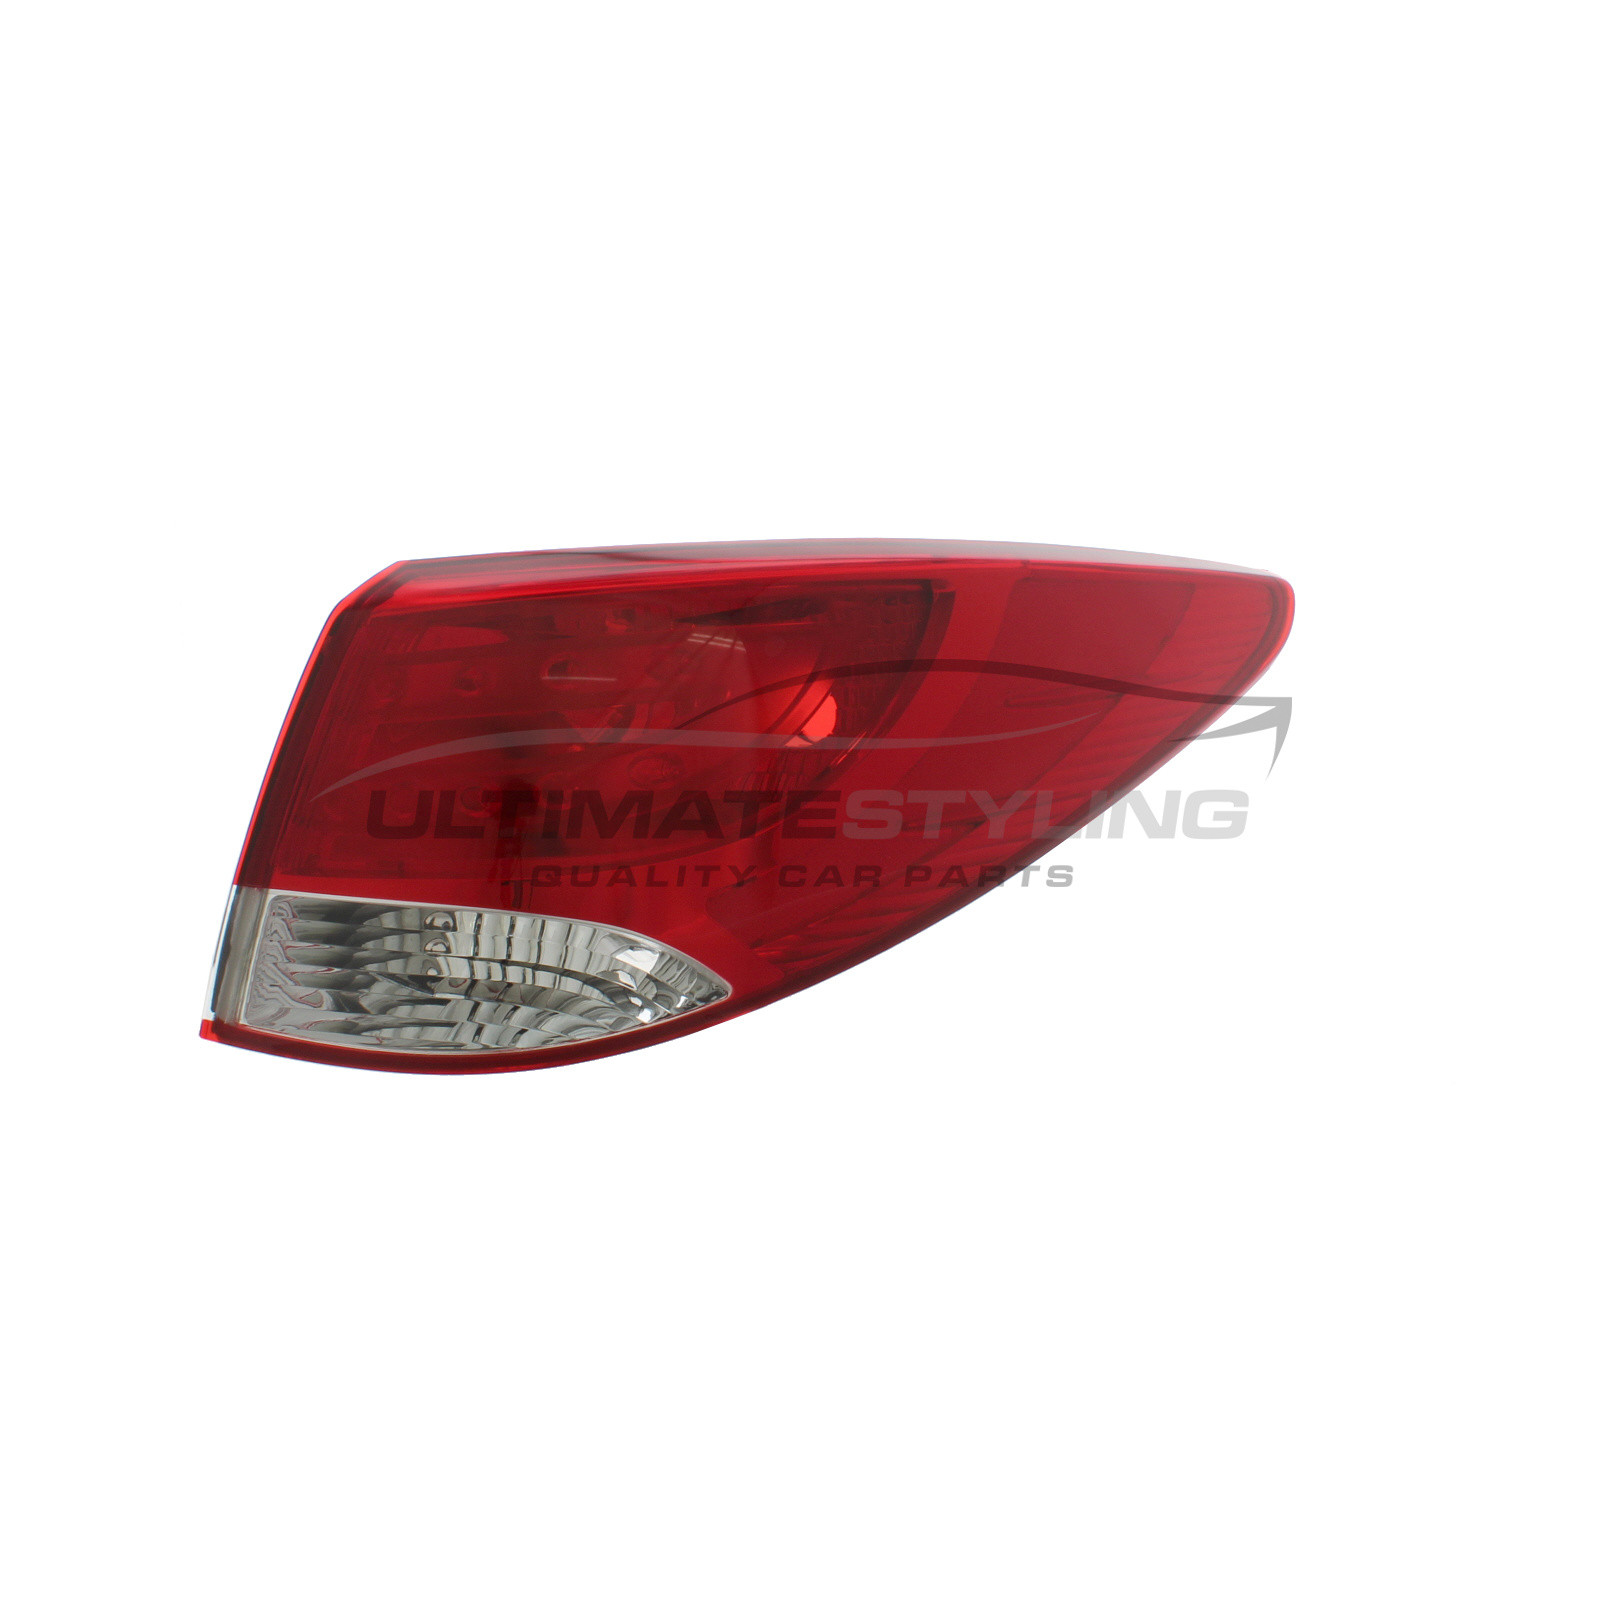 Rear Light / Tail Light for Hyundai ix35